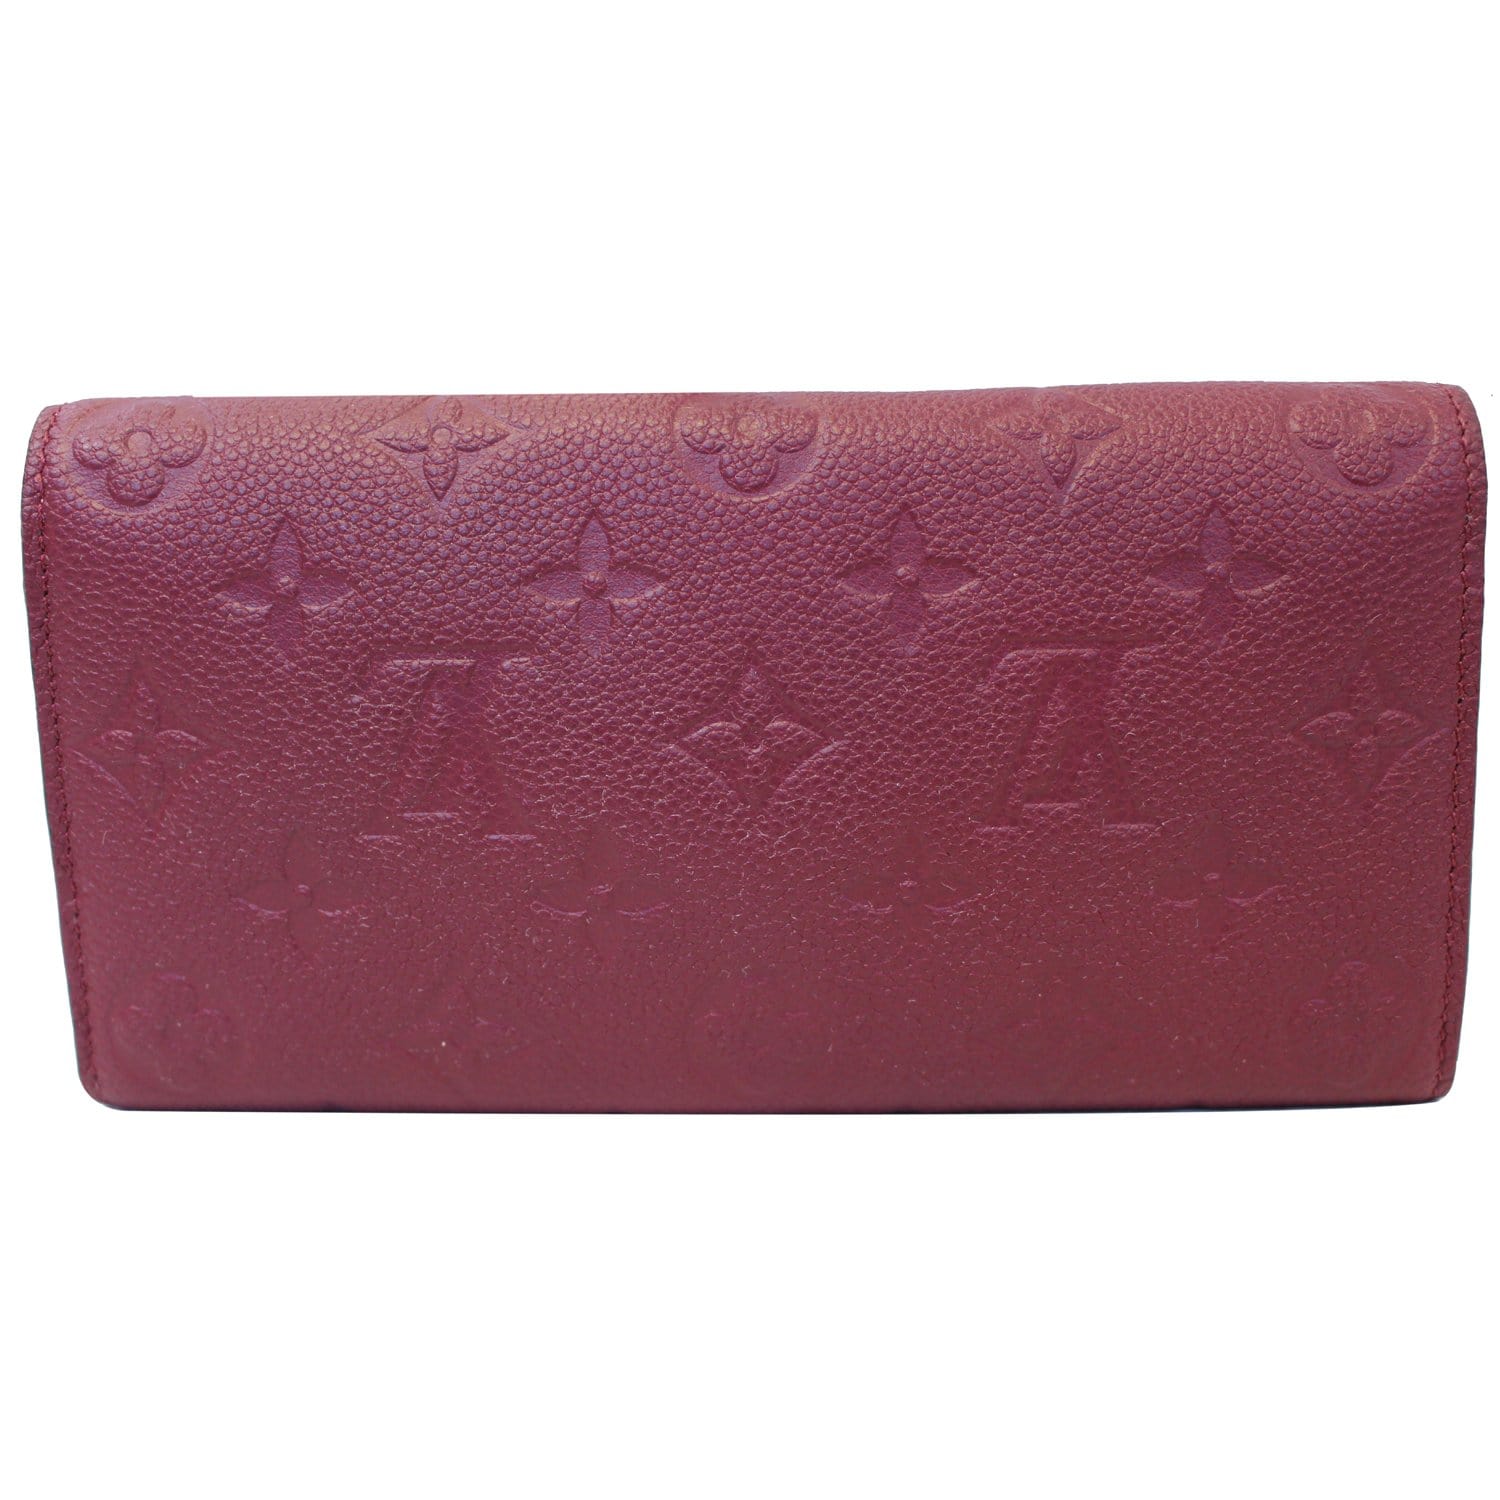 LOUIS VUITTON Emilie Monogram Empreinte Leather Wallet Red